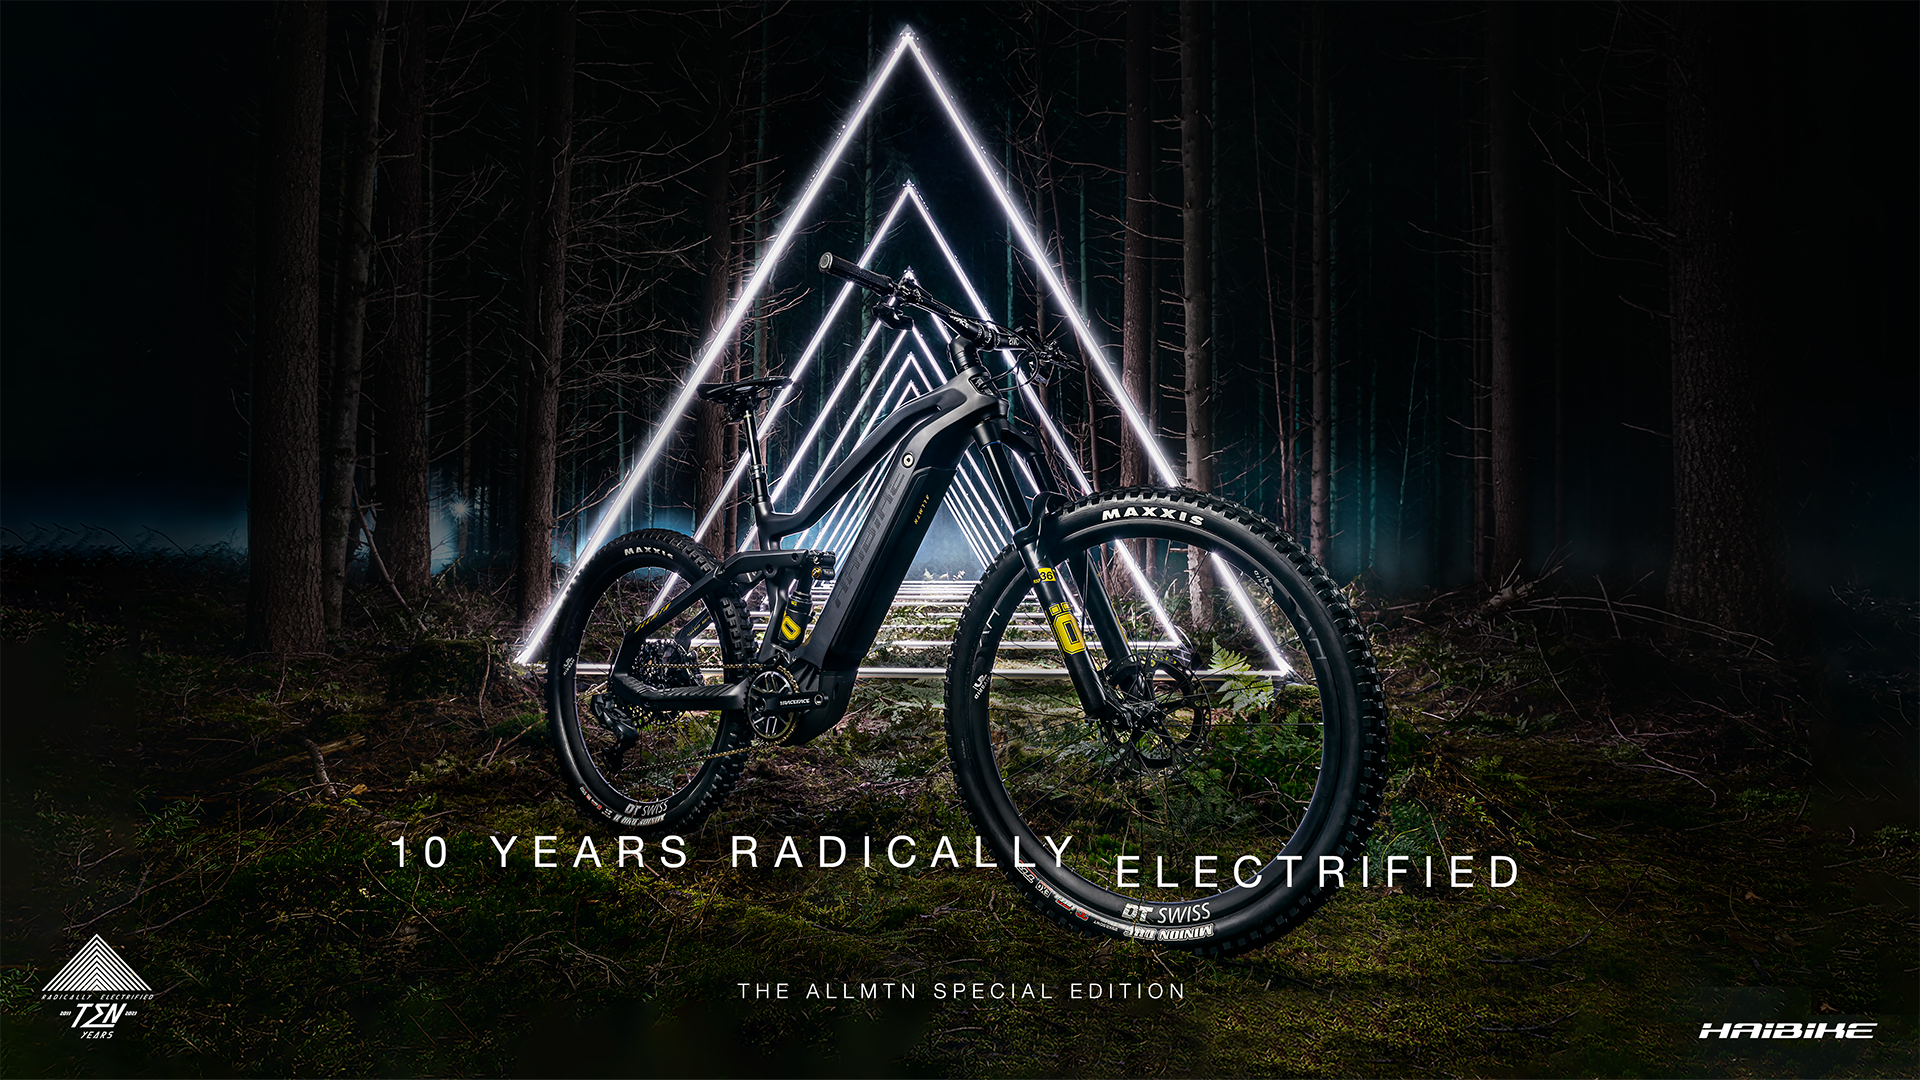 Haibike - 10 Years radically electrified